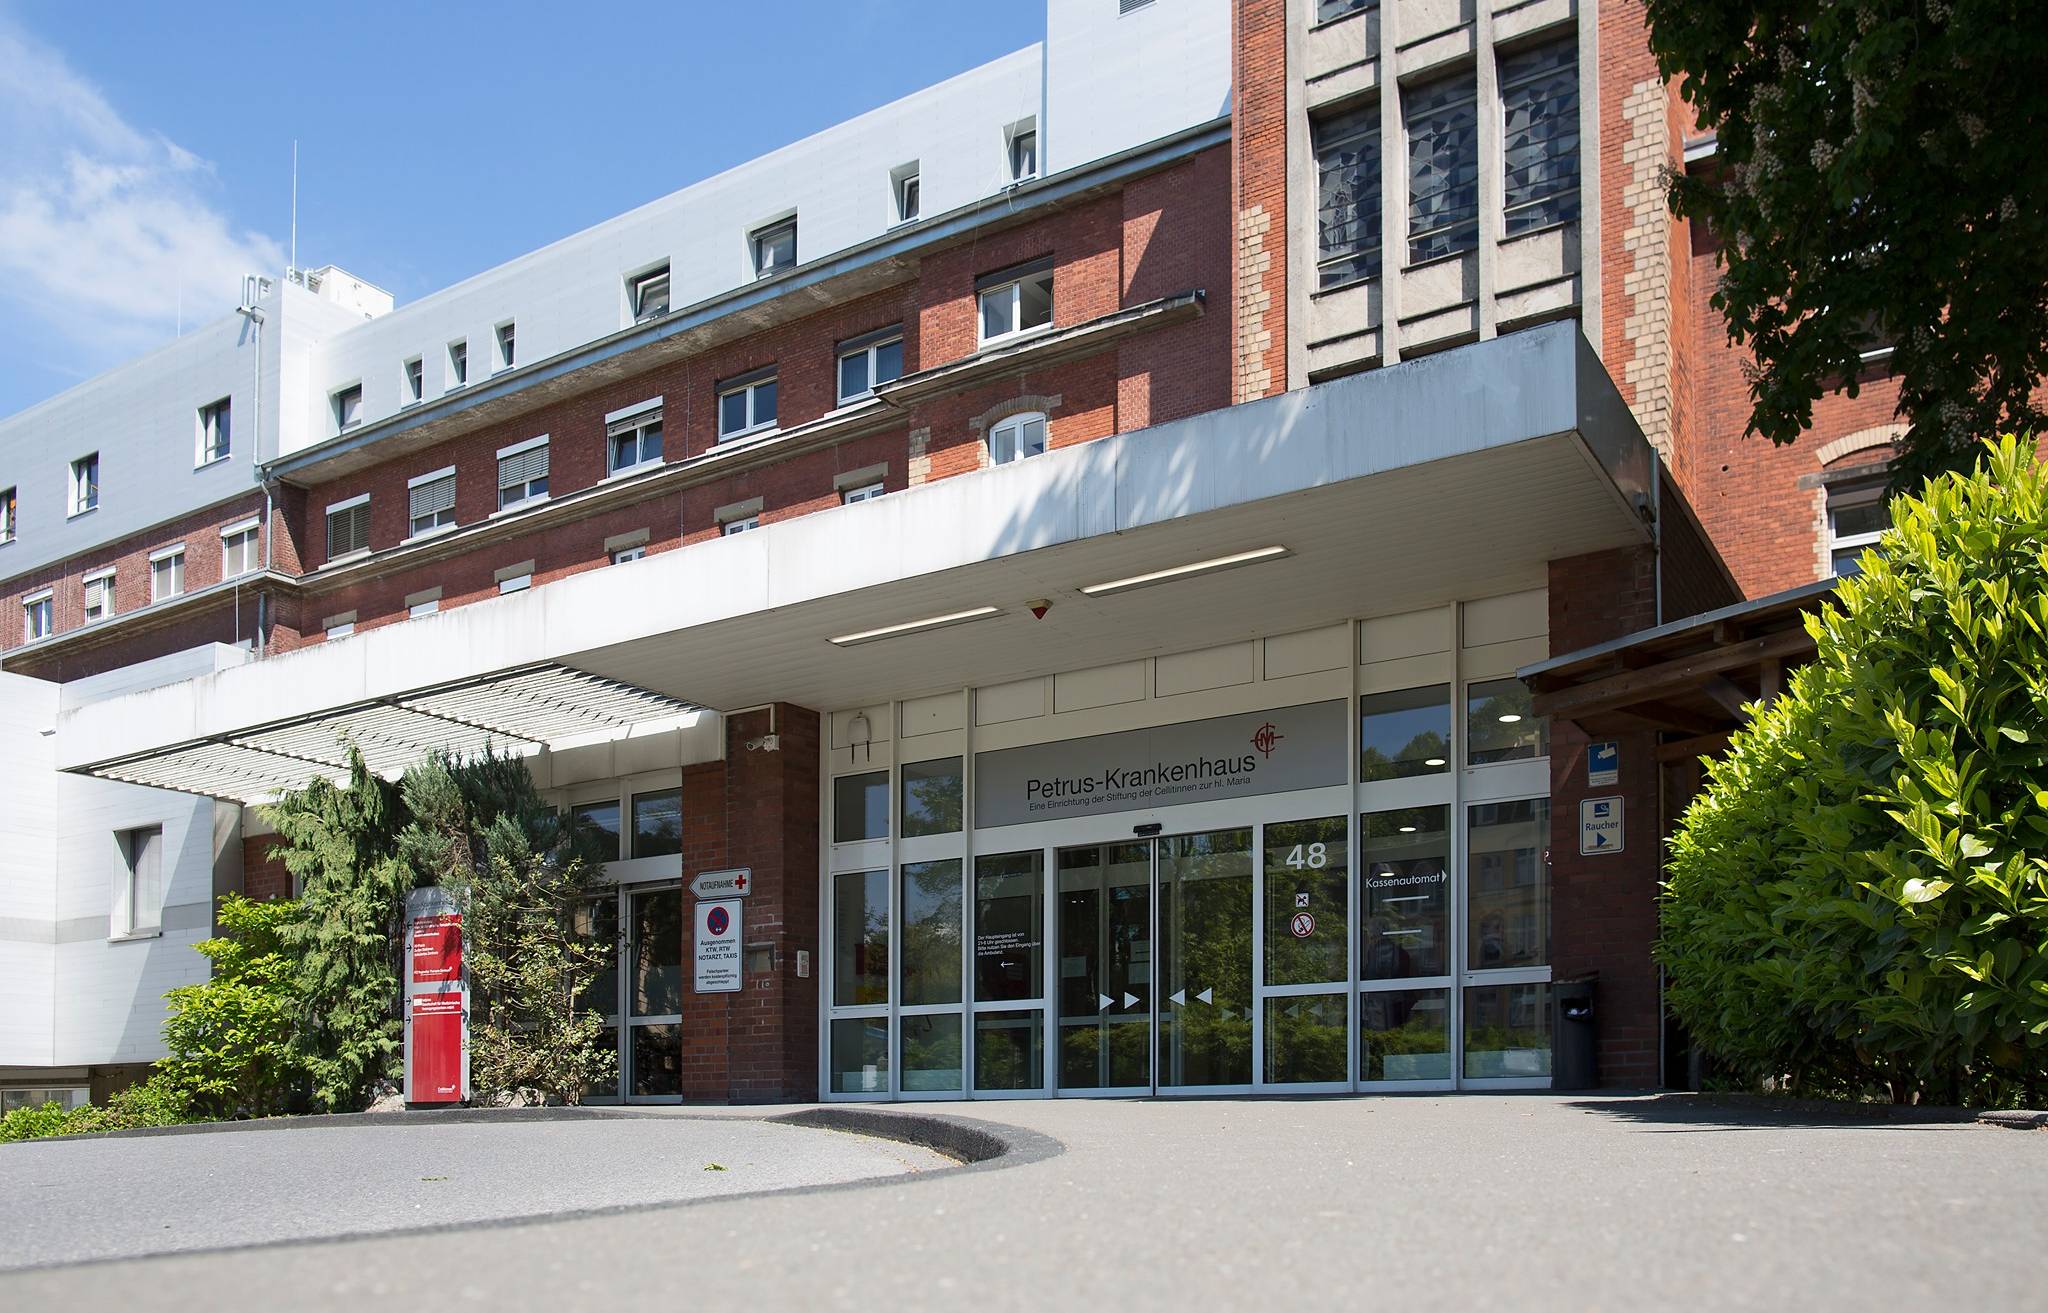 Das Petrus-Krankenhaus in Wuppertal-Barmen.